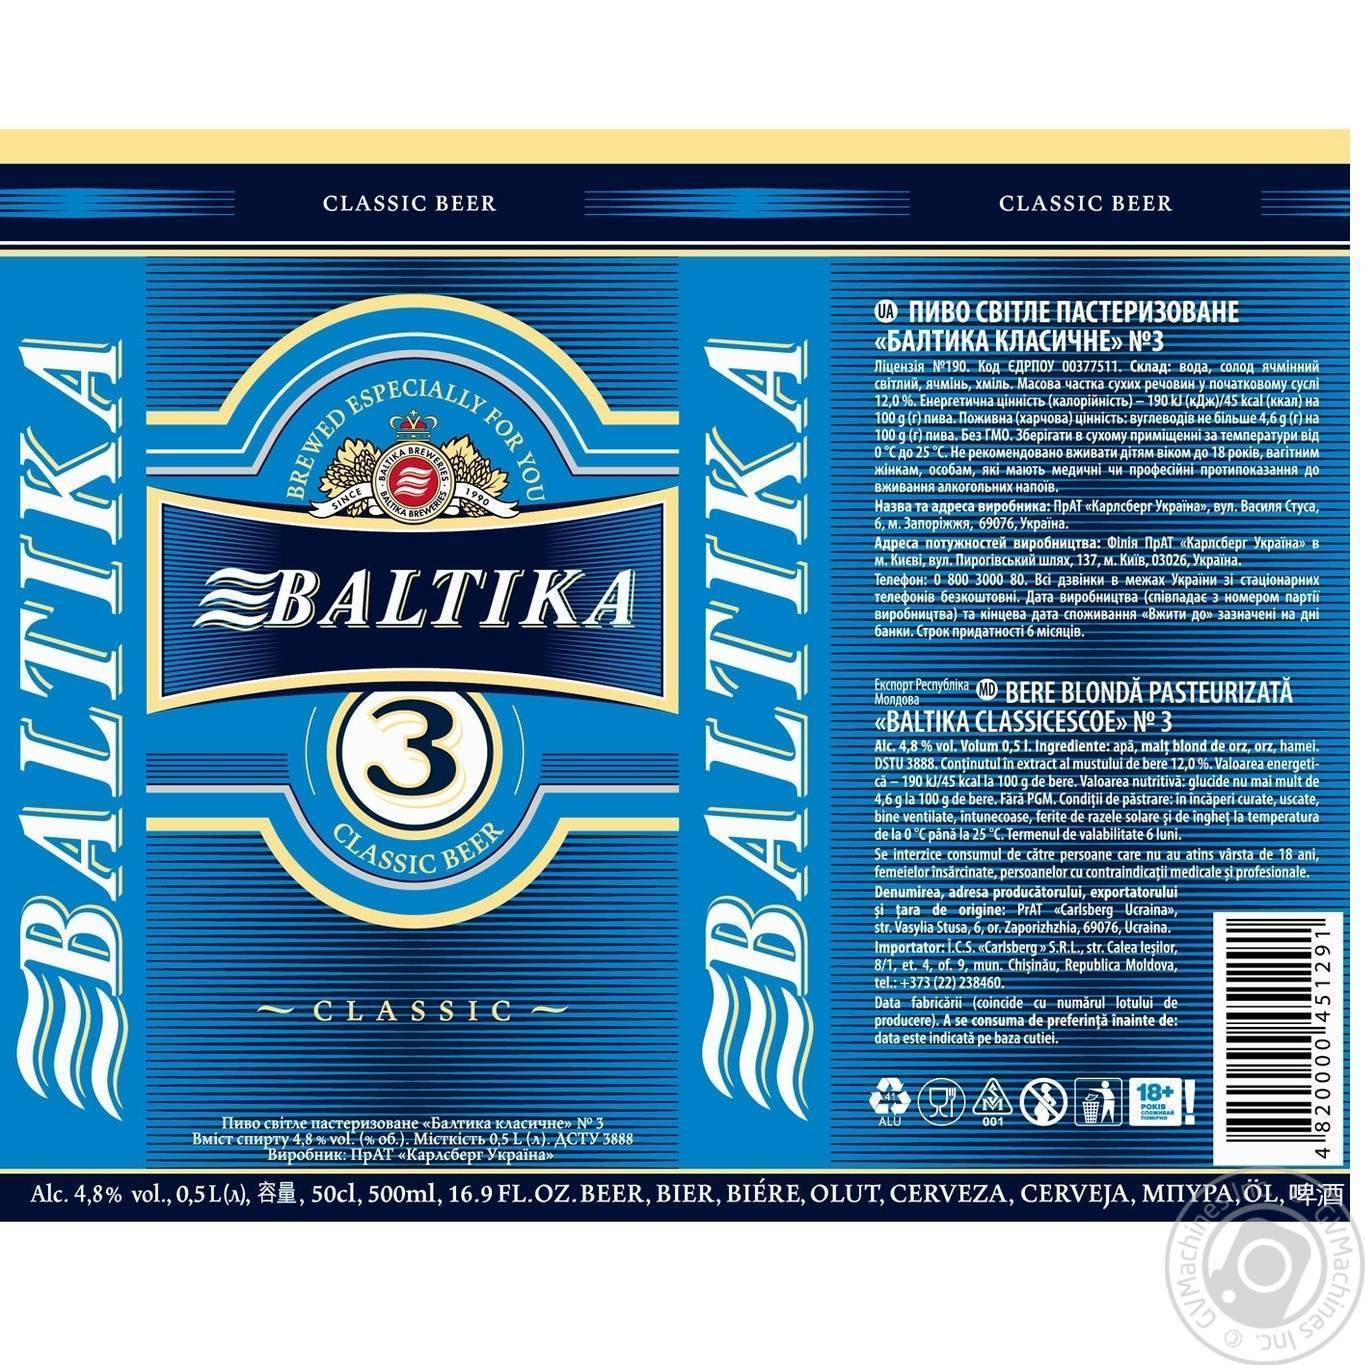 Виды пива балтика: балтика 7, балтика 2, балтика 3 и другие